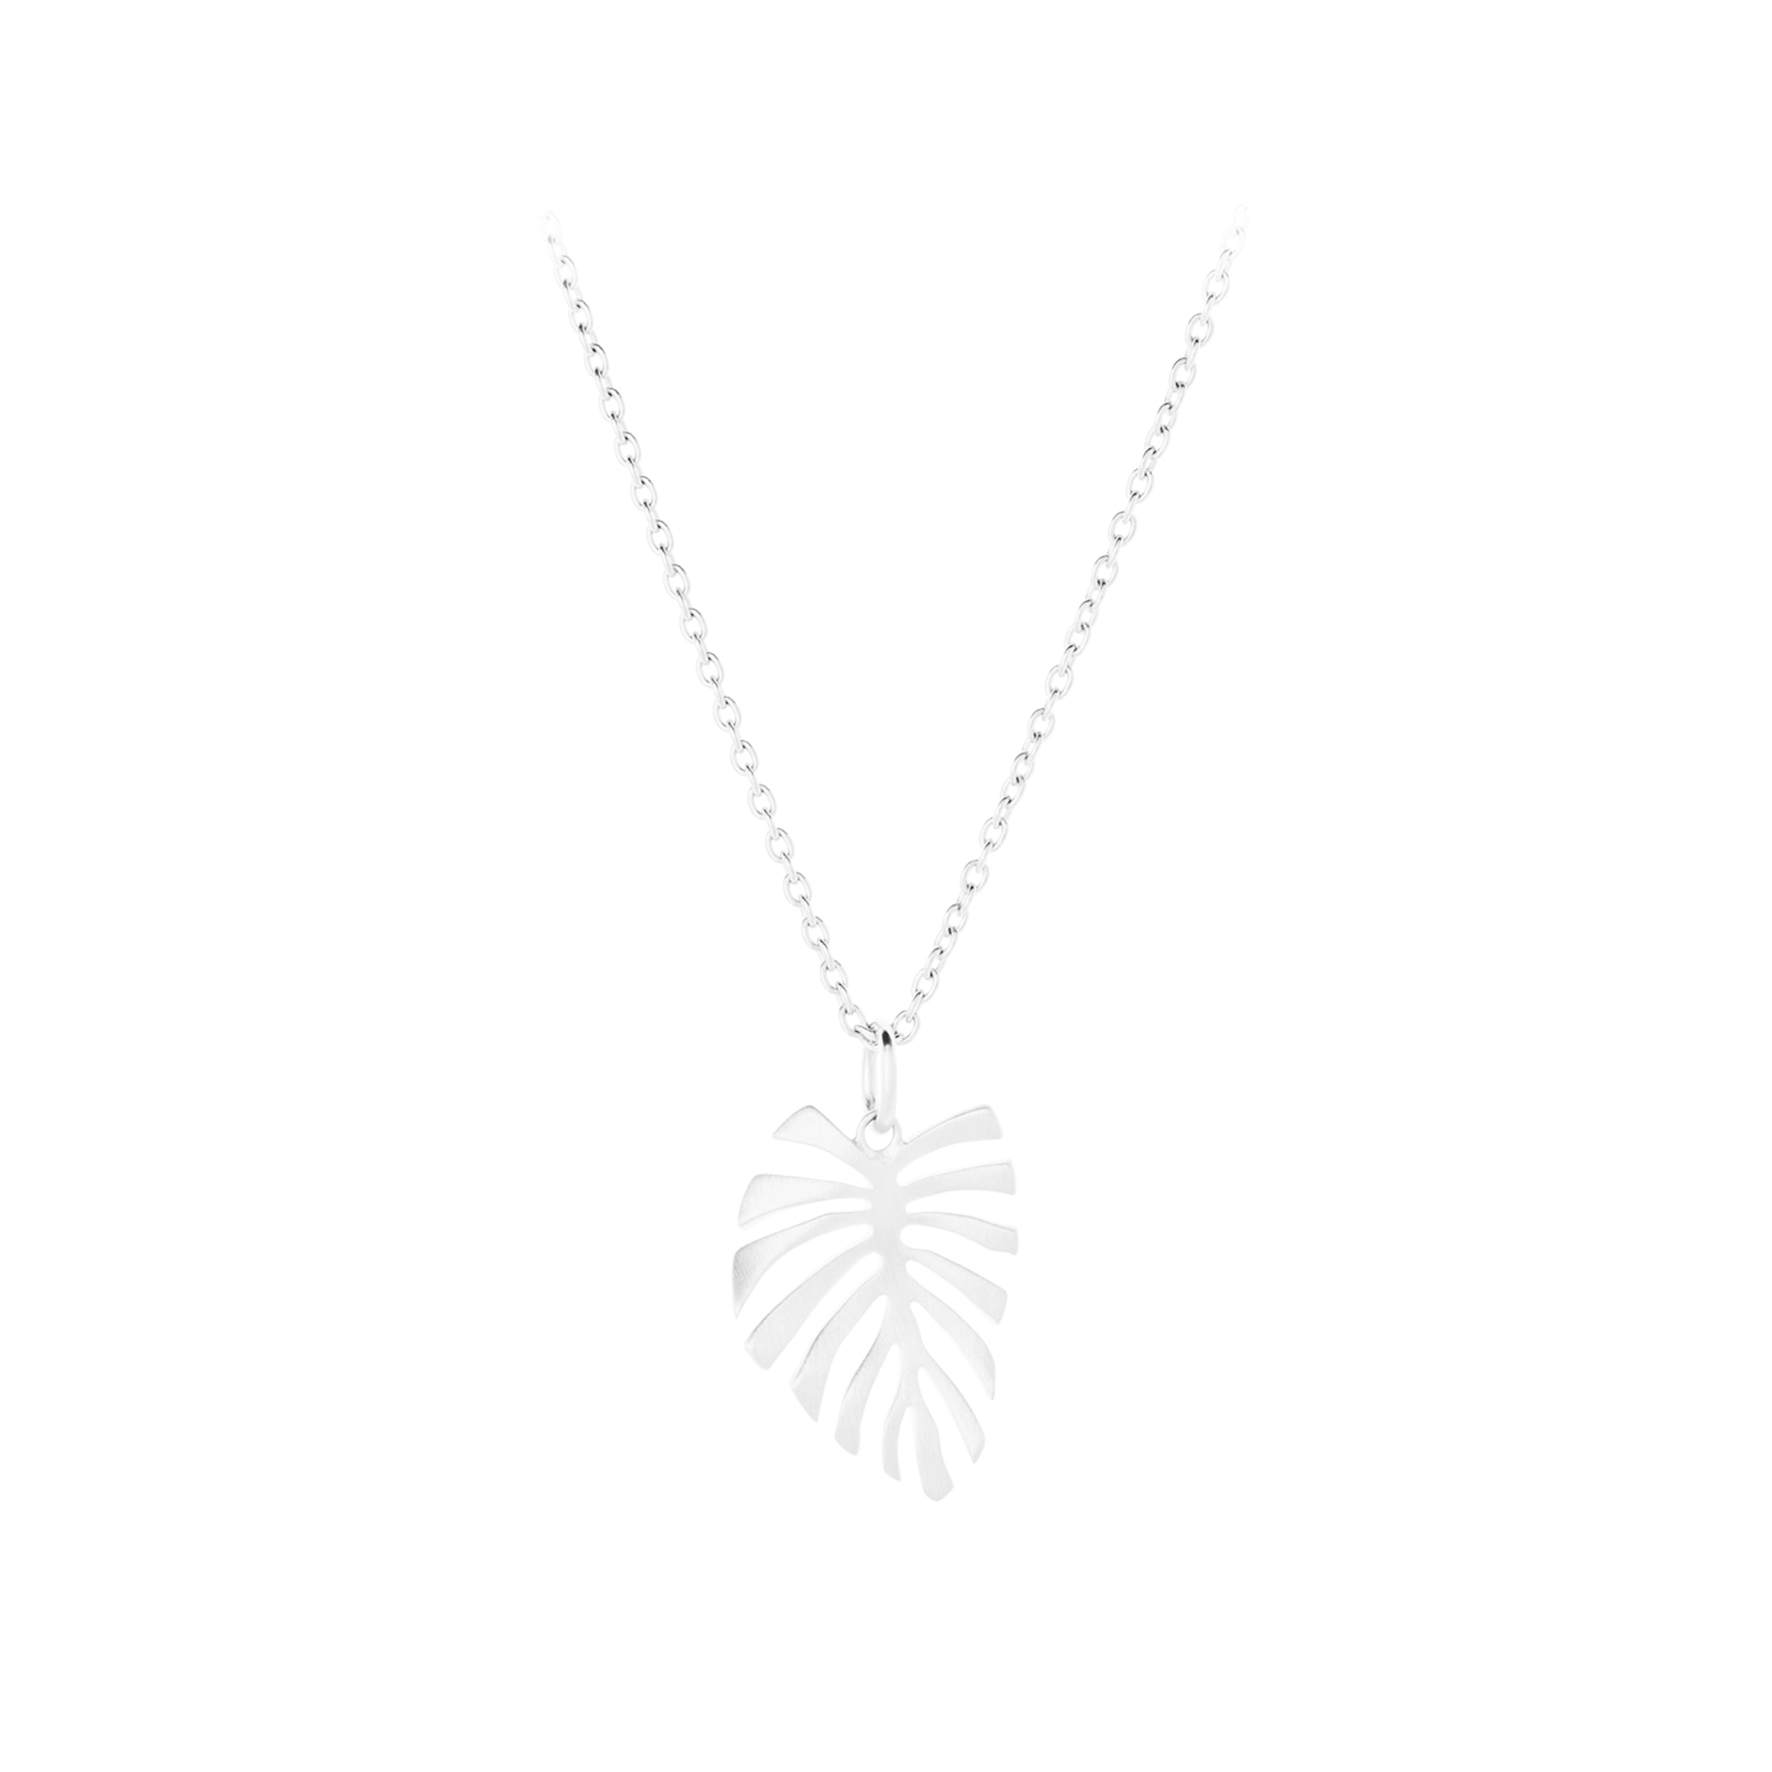 Fern Leaf Necklace von Pernille Corydon in Silber Sterling 925